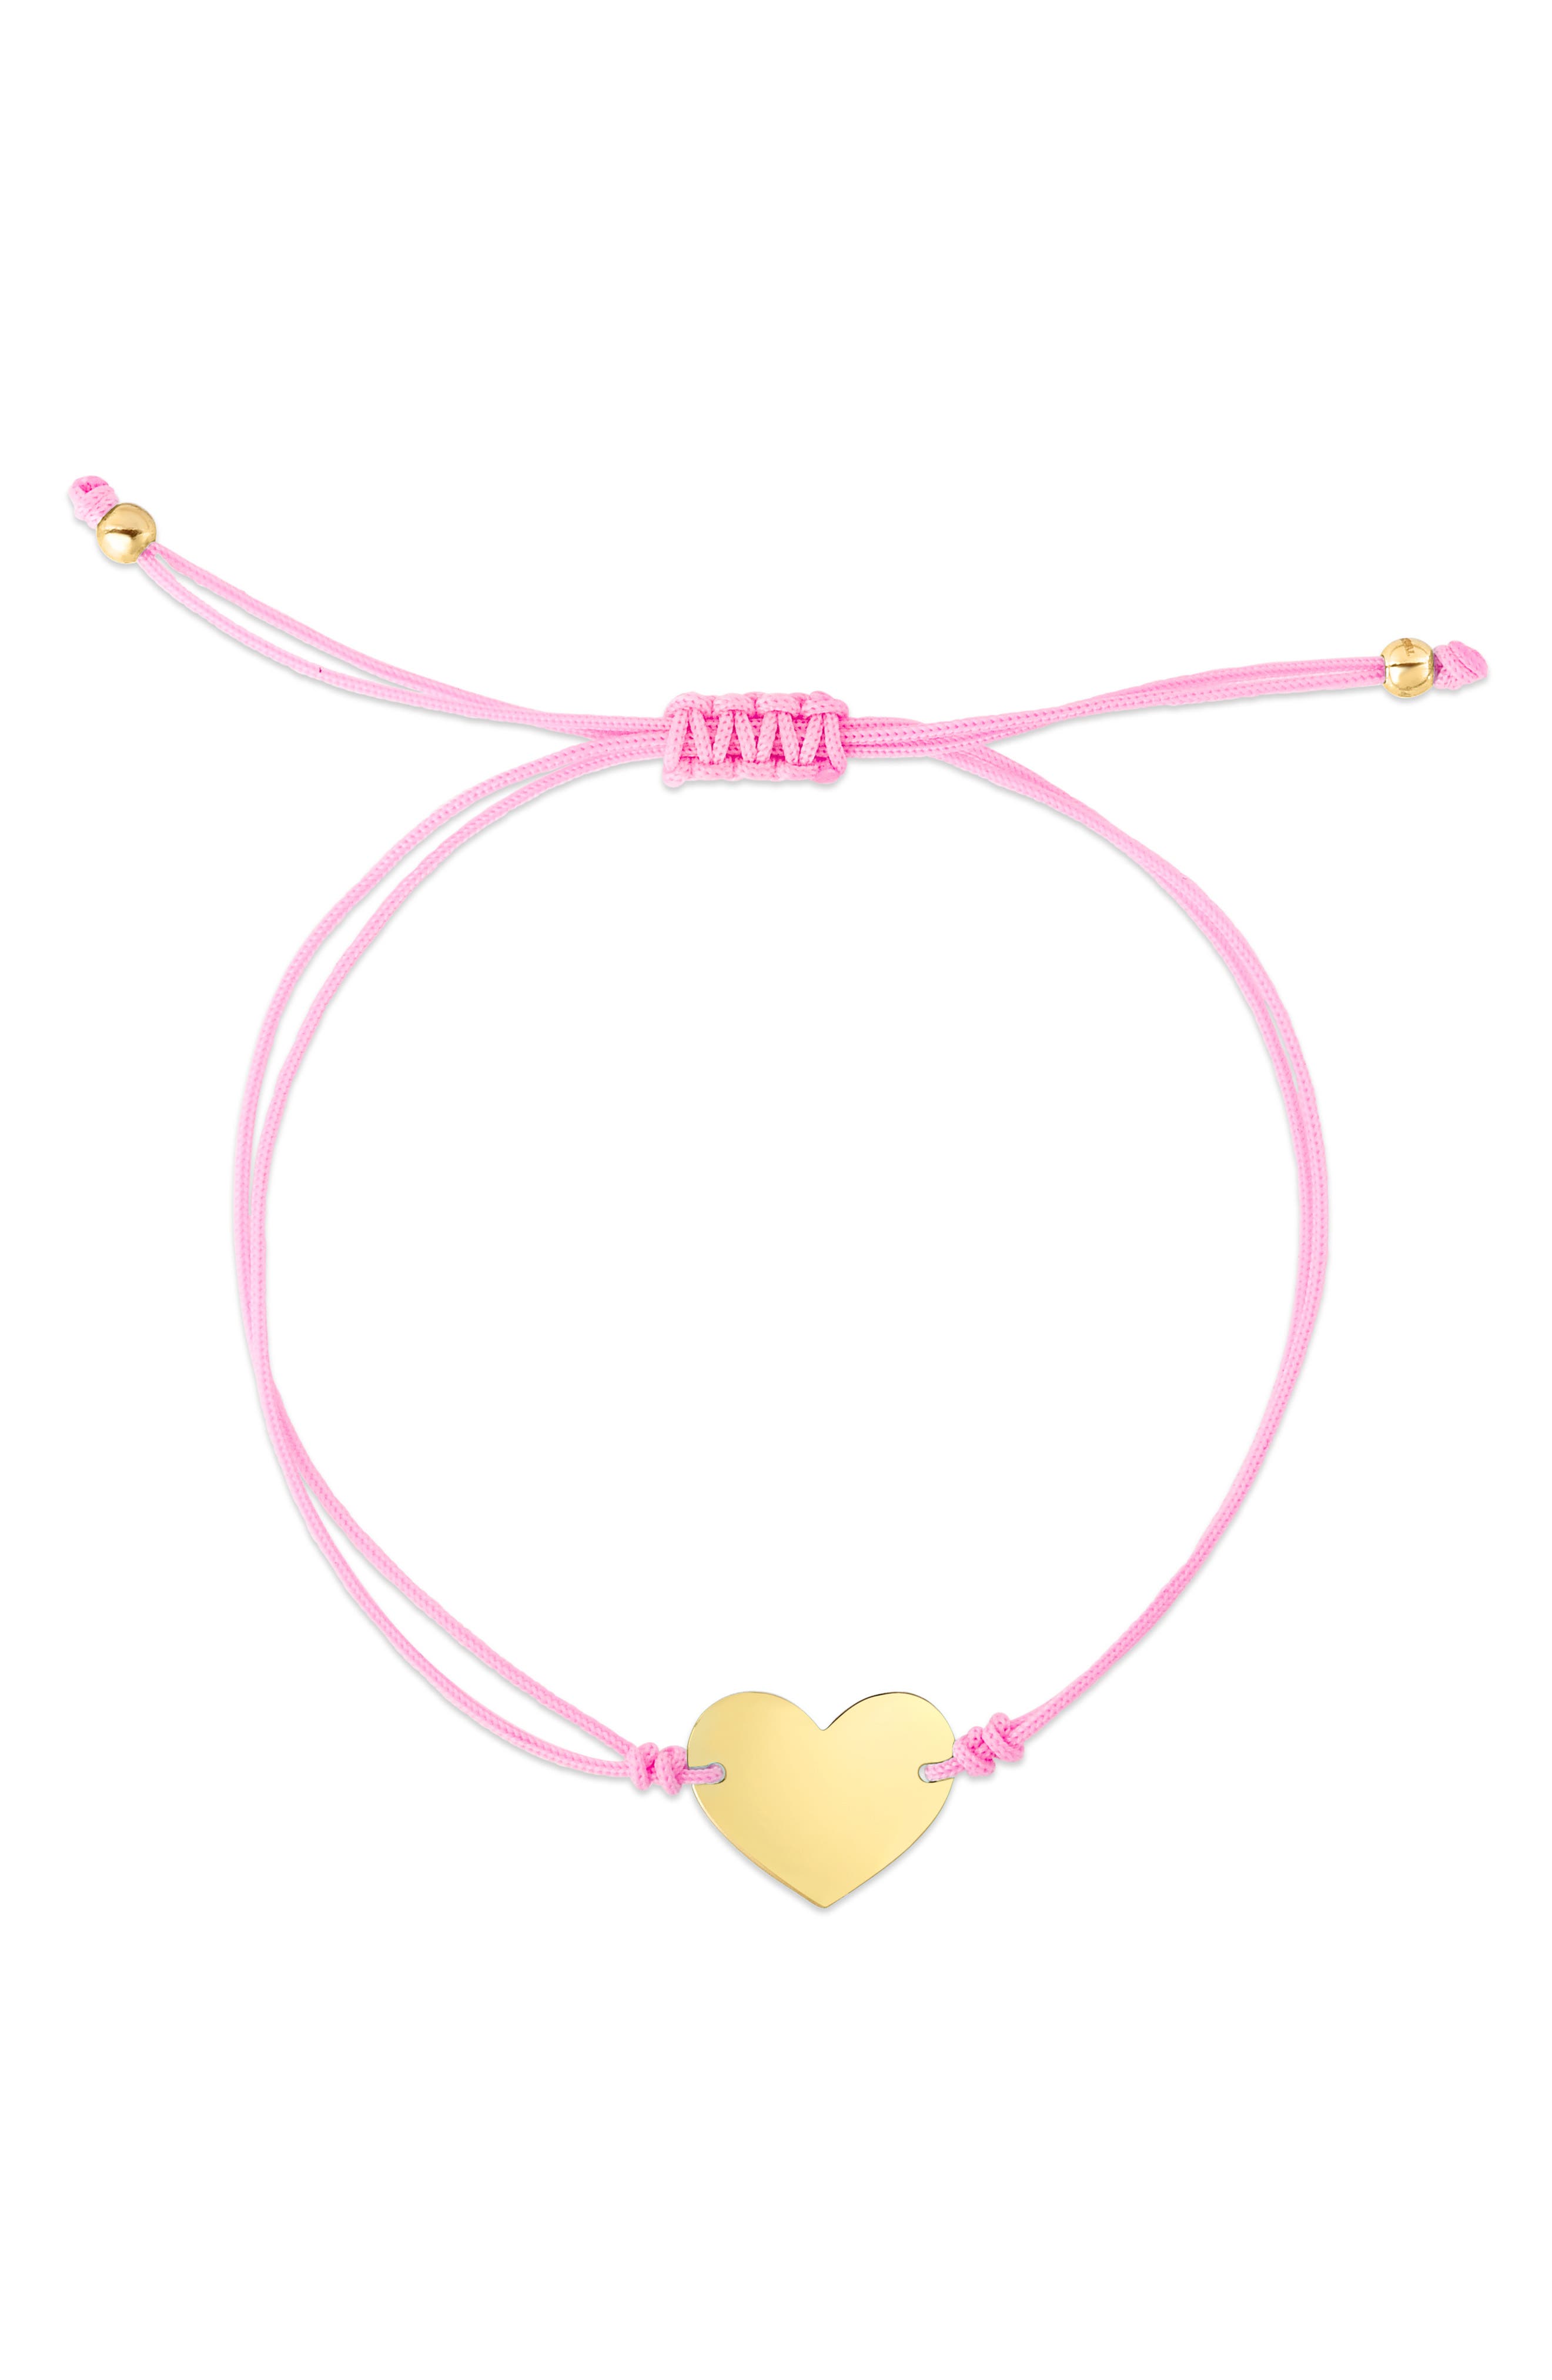 Karat Rush 14k Gold Heart Slider Bracelet In Gold And Hot Pink Cord